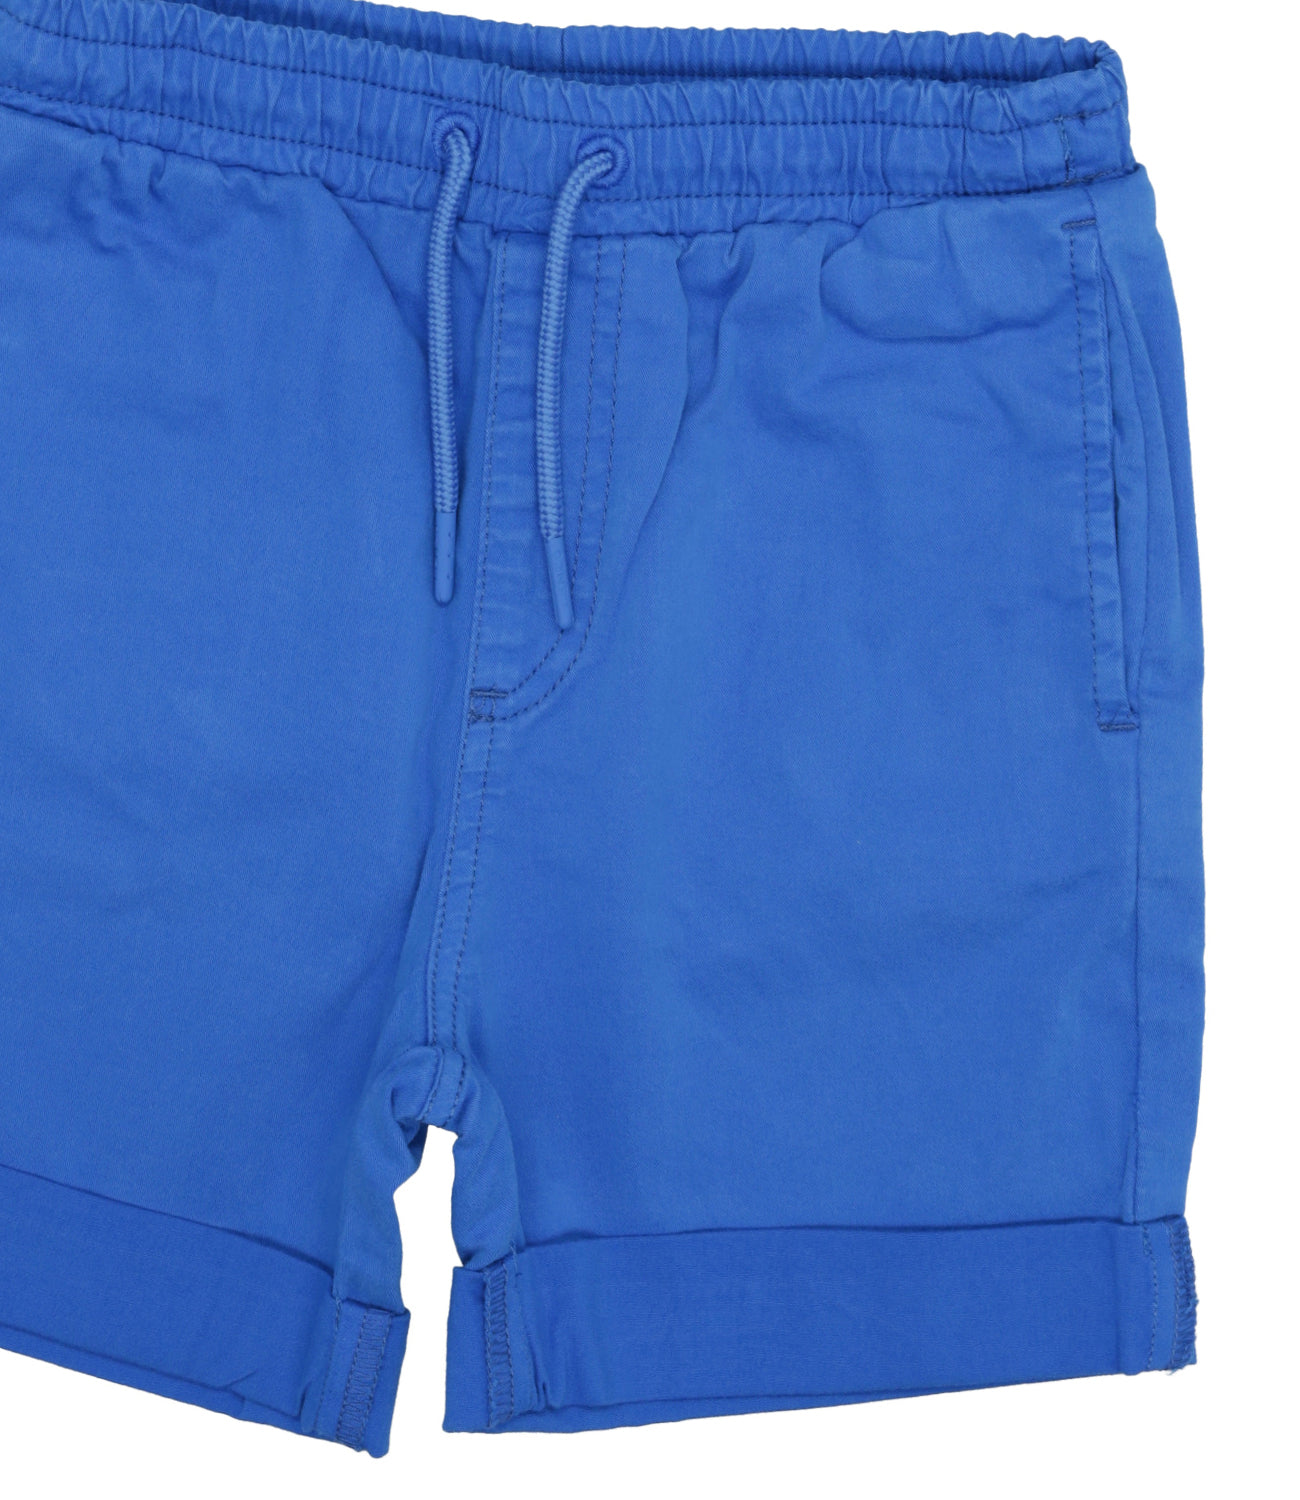 Kenzo Kids | Electric Blue Bermuda Shorts